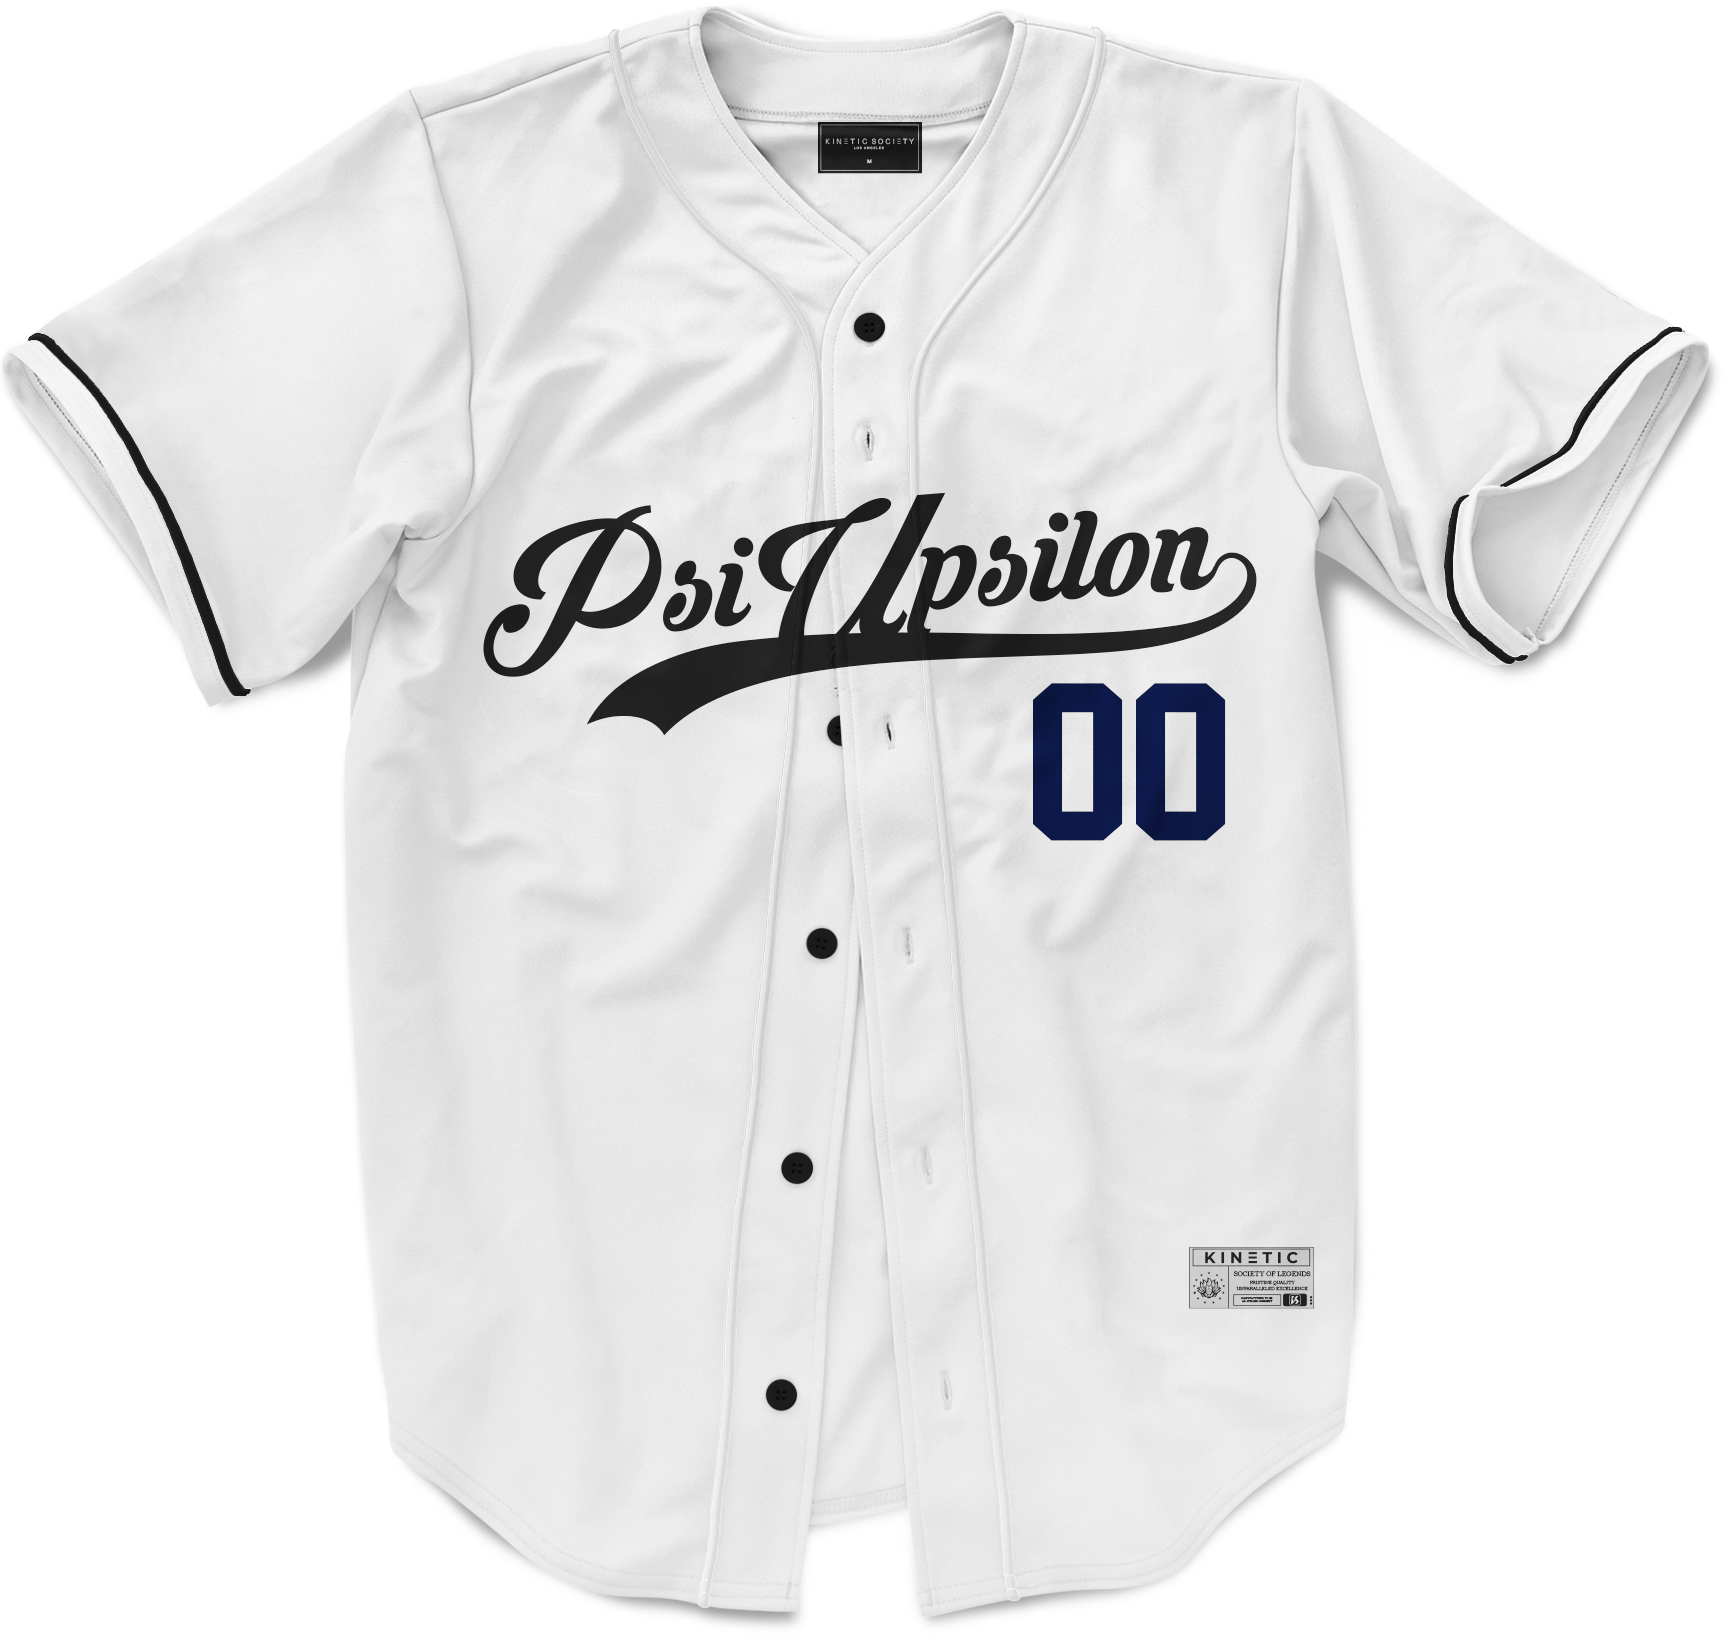 Psi Upsilon - Classic Ballpark Blue Baseball Jersey